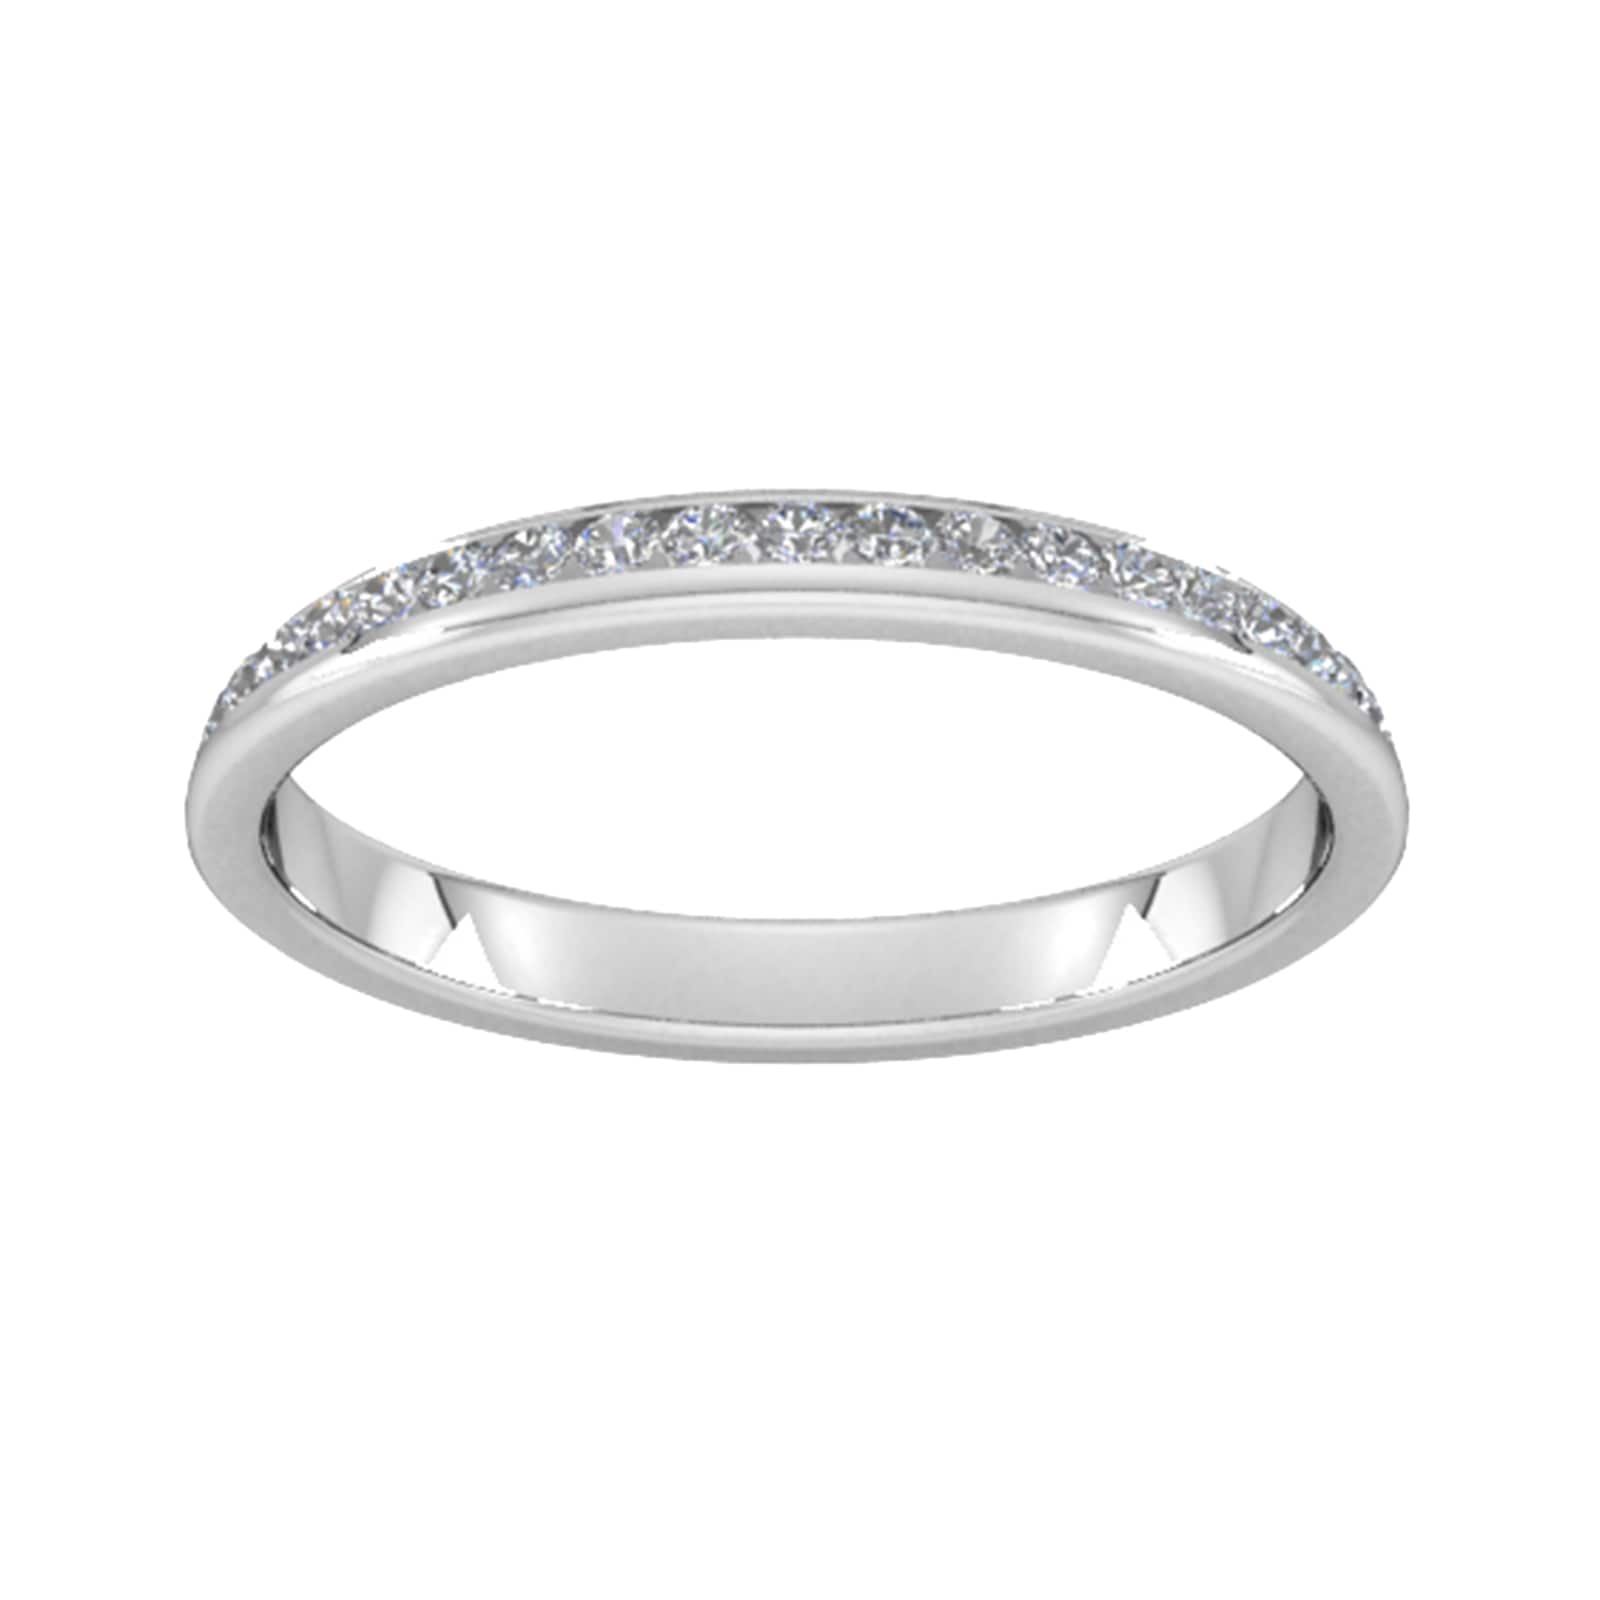 0.42 Carat Total Weight Brilliant Cut Full Diamond Set Pyramid Style Wedding Ring In Platinum - Ring Size G